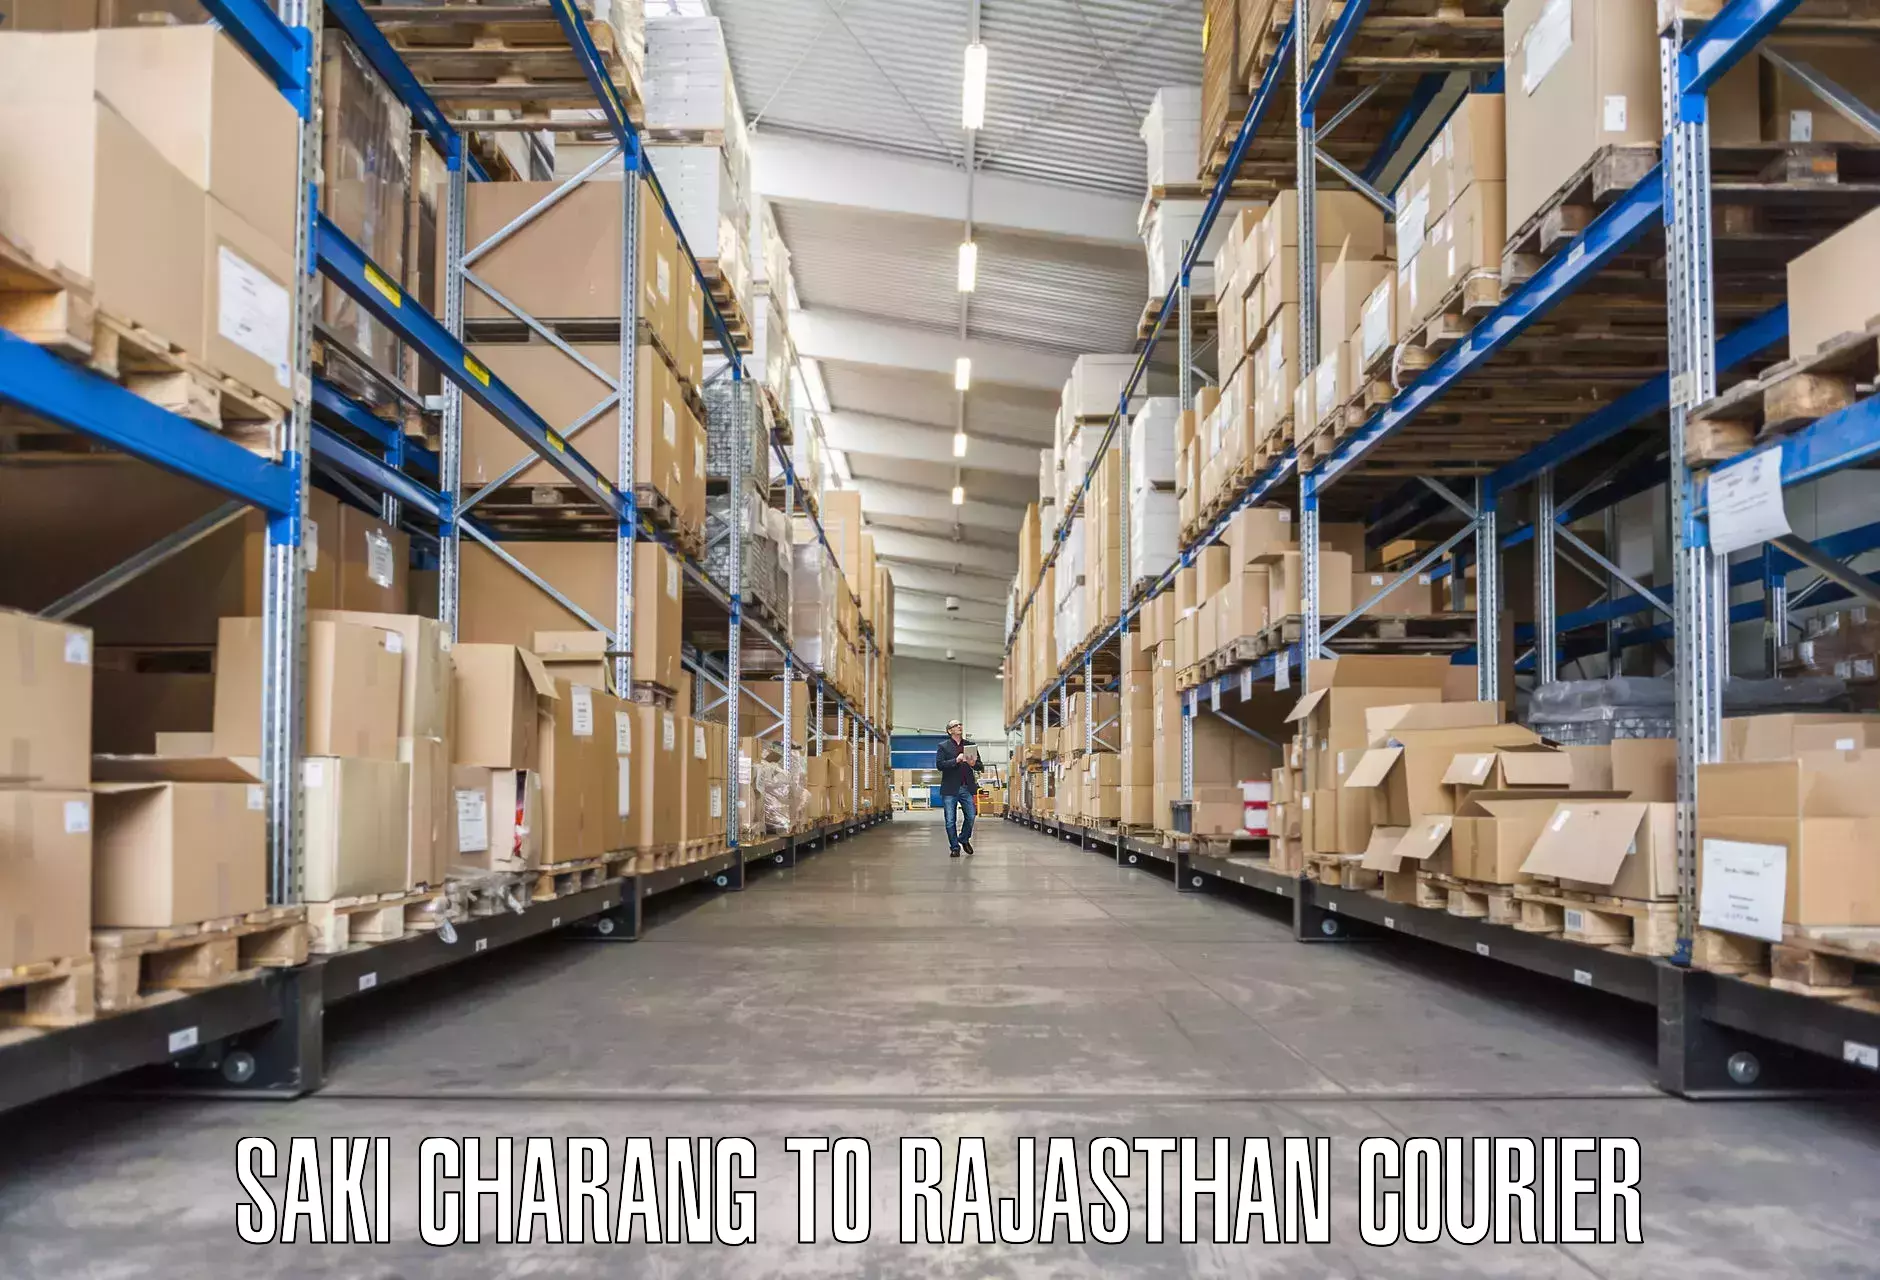 Household goods transport service Saki Charang to Gotan